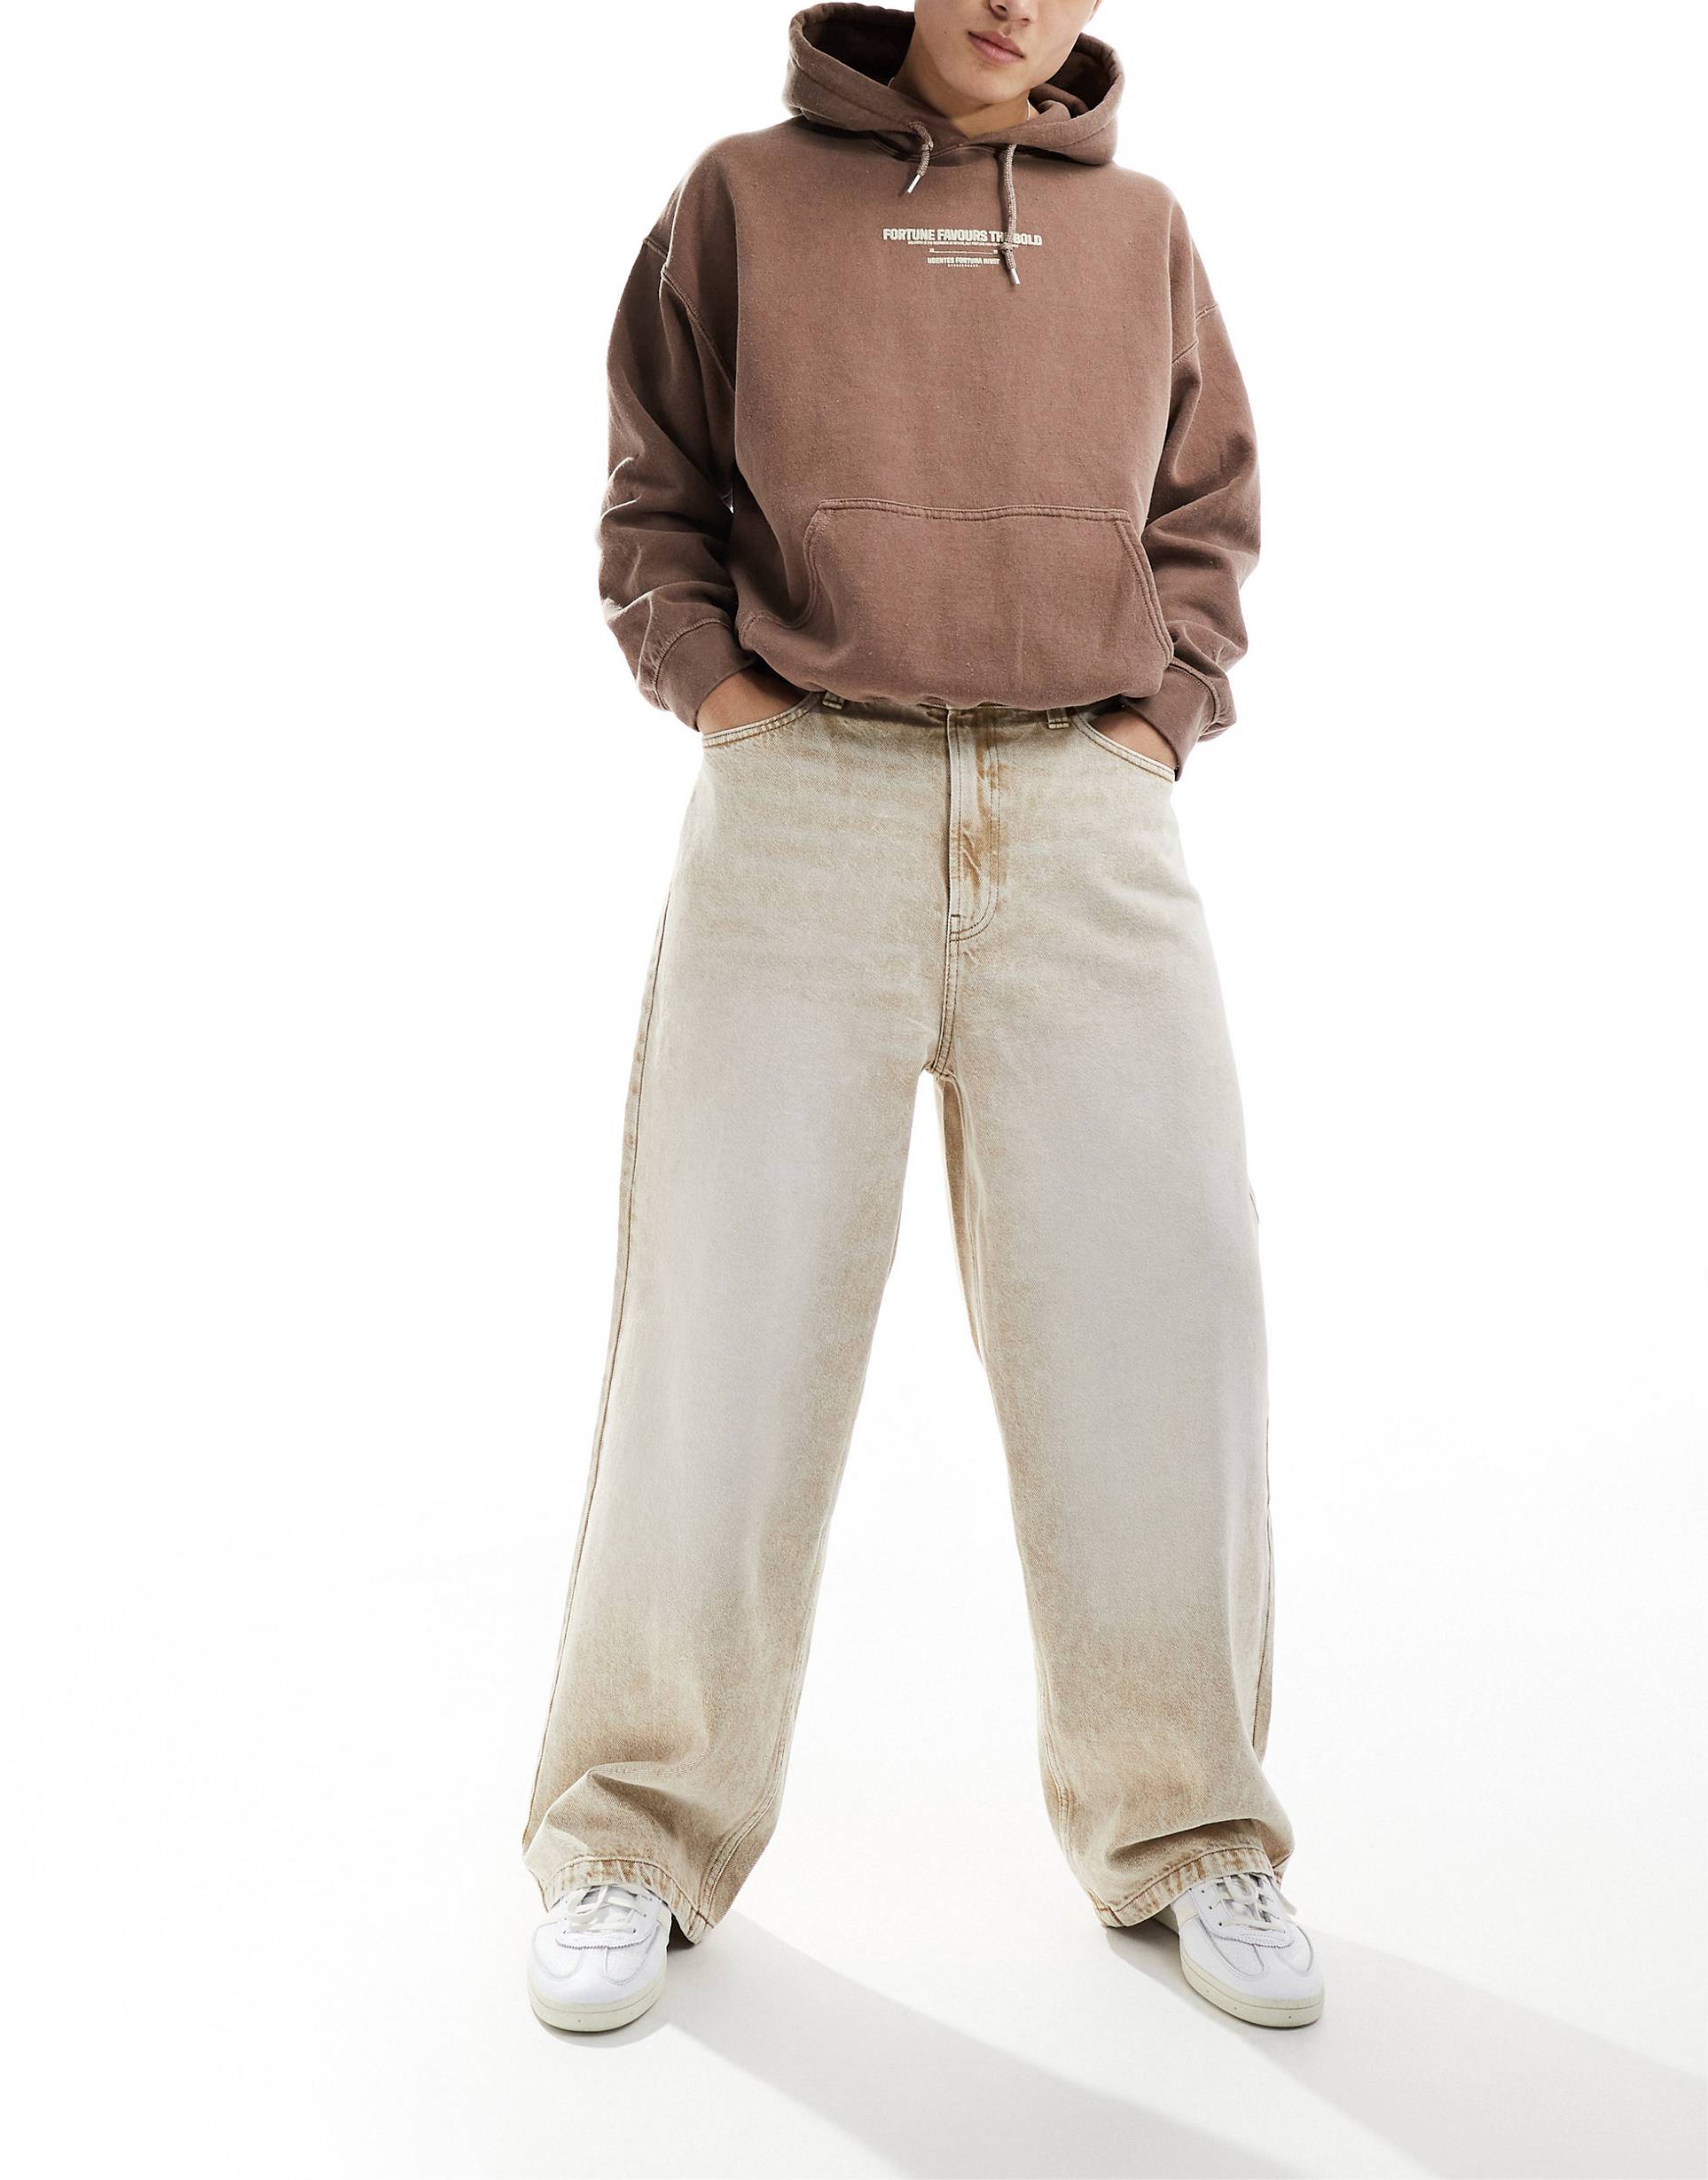 Джинсы Bershka Skater Fit Casted, бежевый джинсы bershka короткие 42 размер